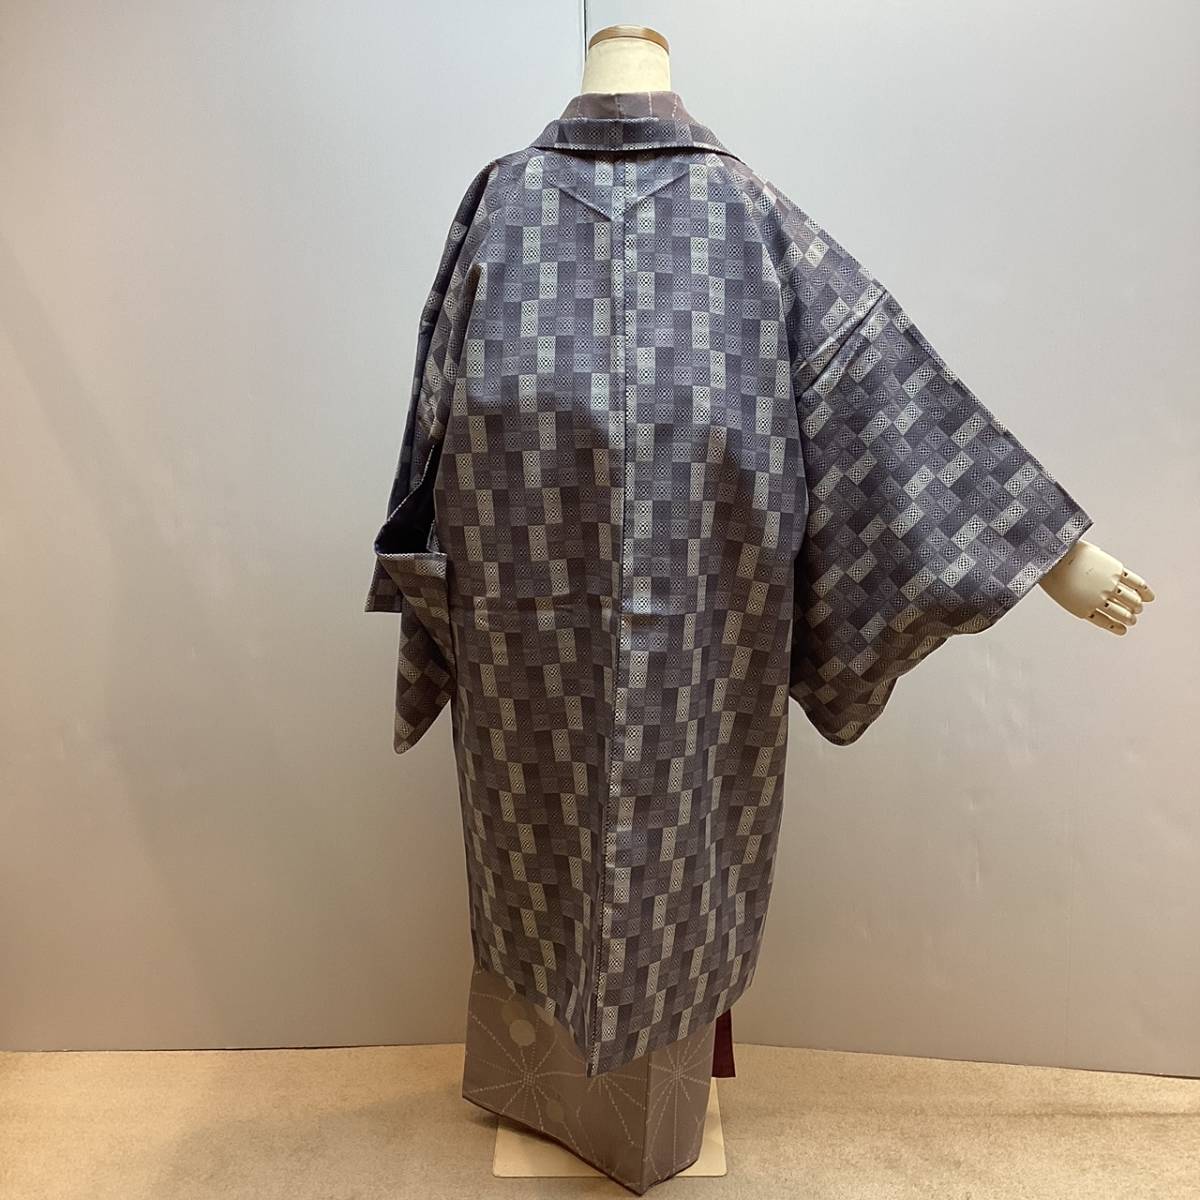  brand new feather woven ha163 purple gray . what . pattern kimono coat ... kimono new goods postage included 